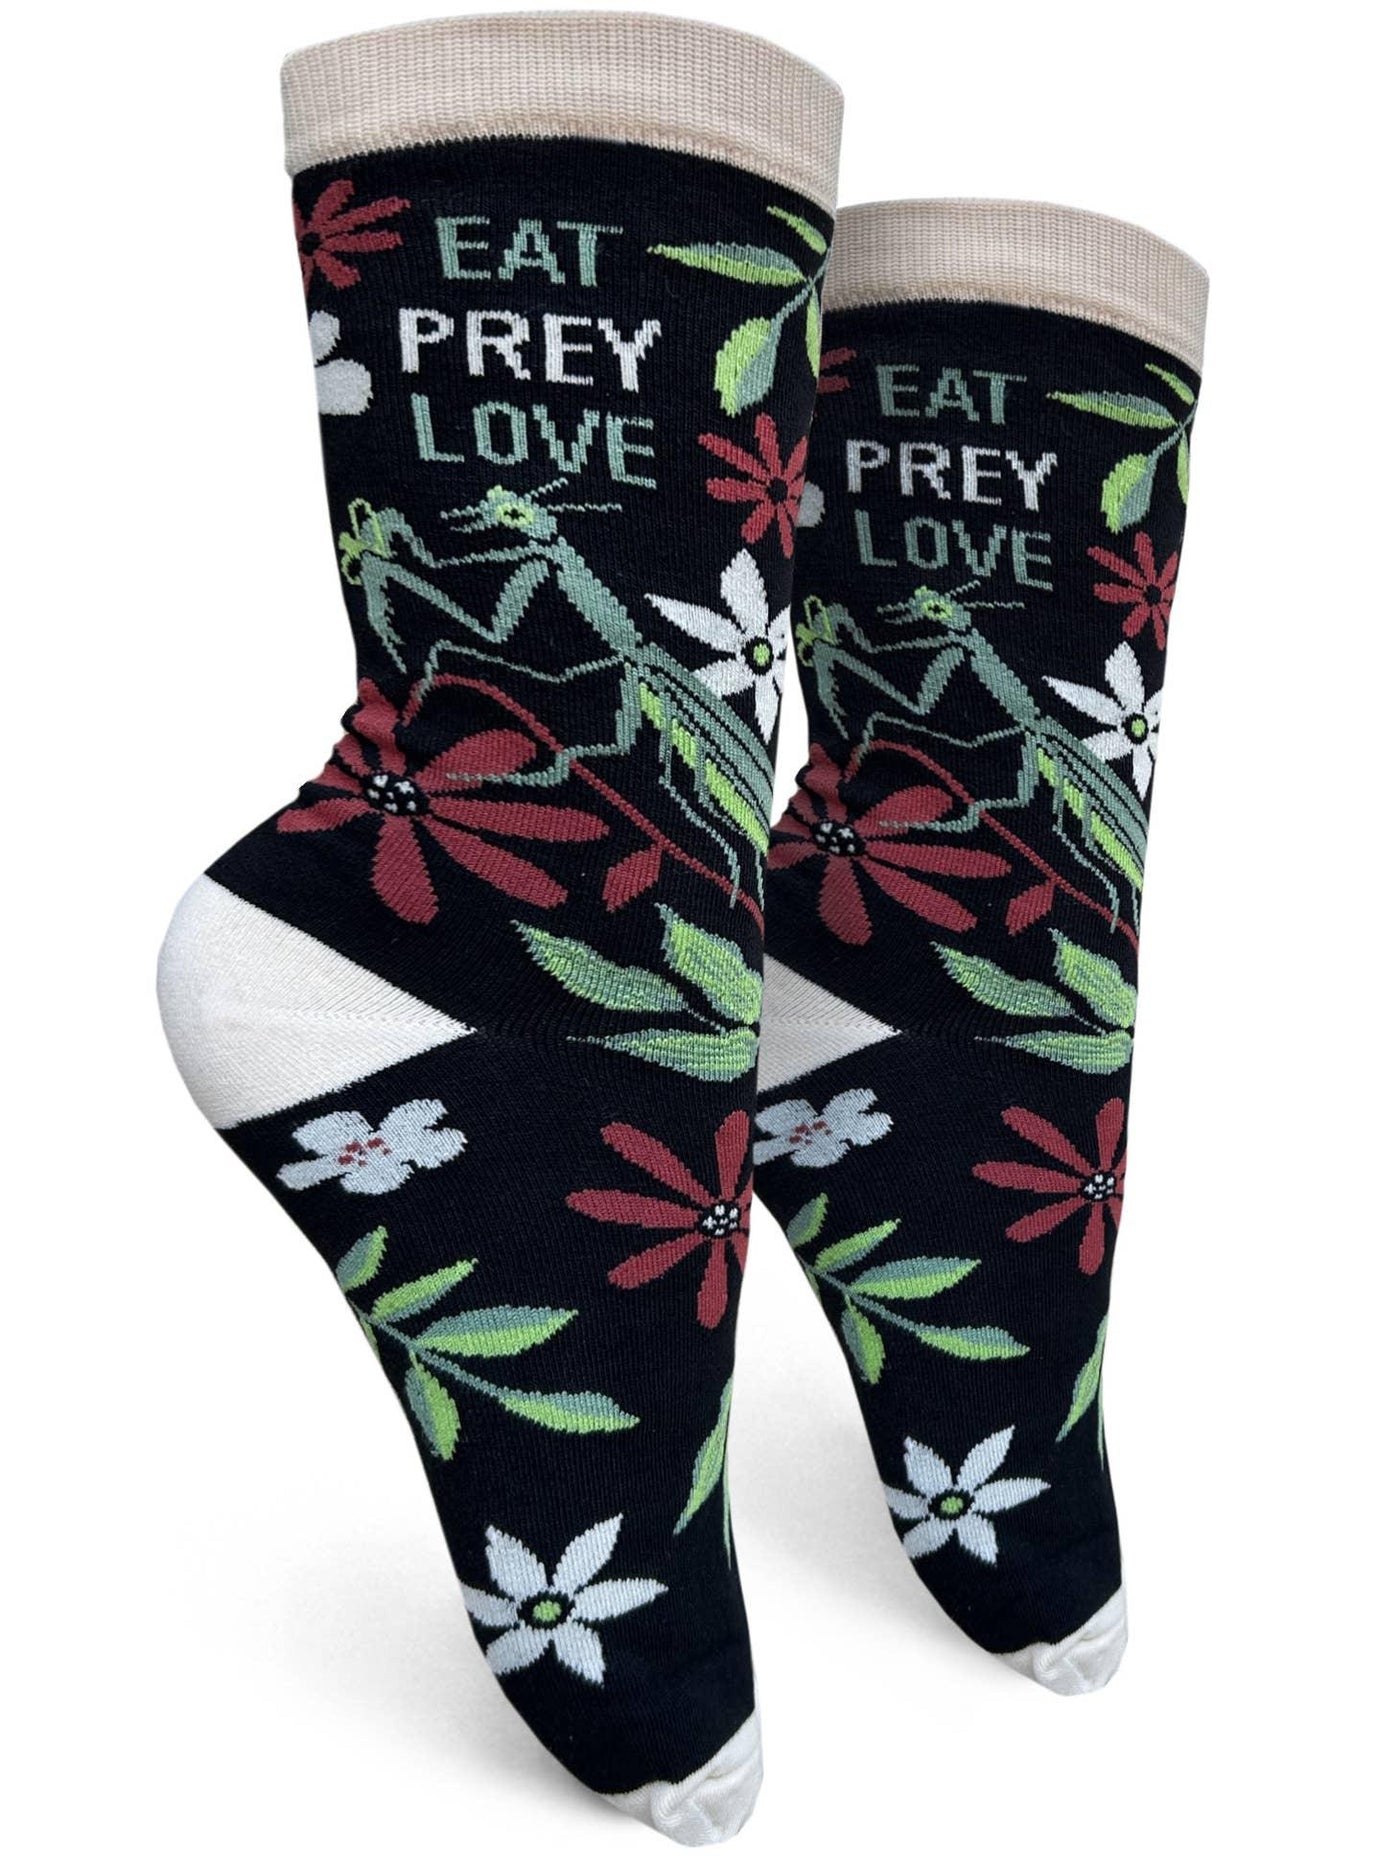 Eat Prey Love, Womens Crew - Groovy Things - The Sock Monster